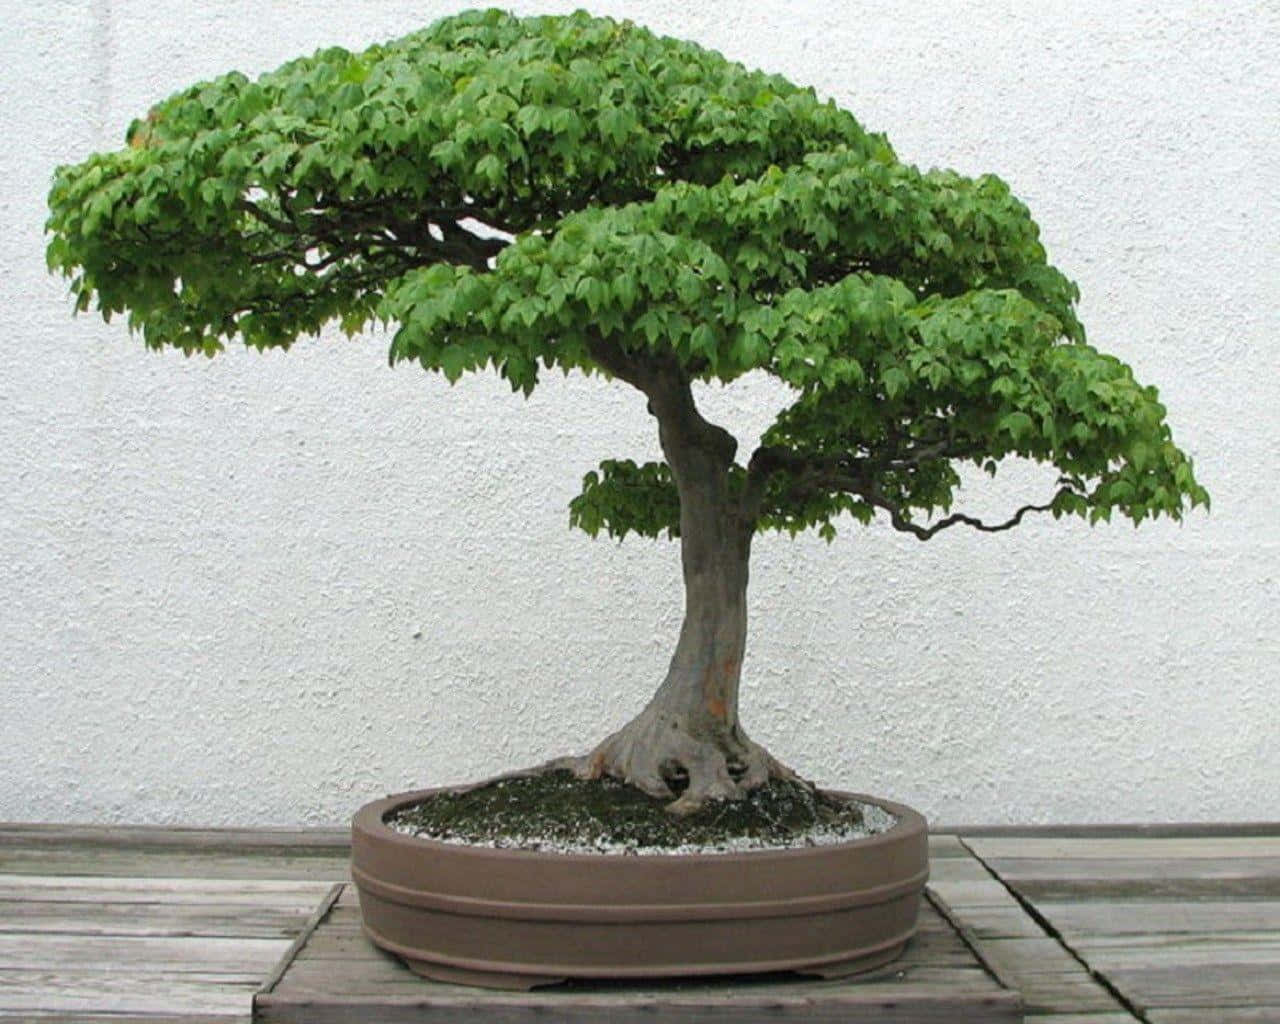 "An Ancient Art Form Lives On - A Bonsai Tree Stands Tall"